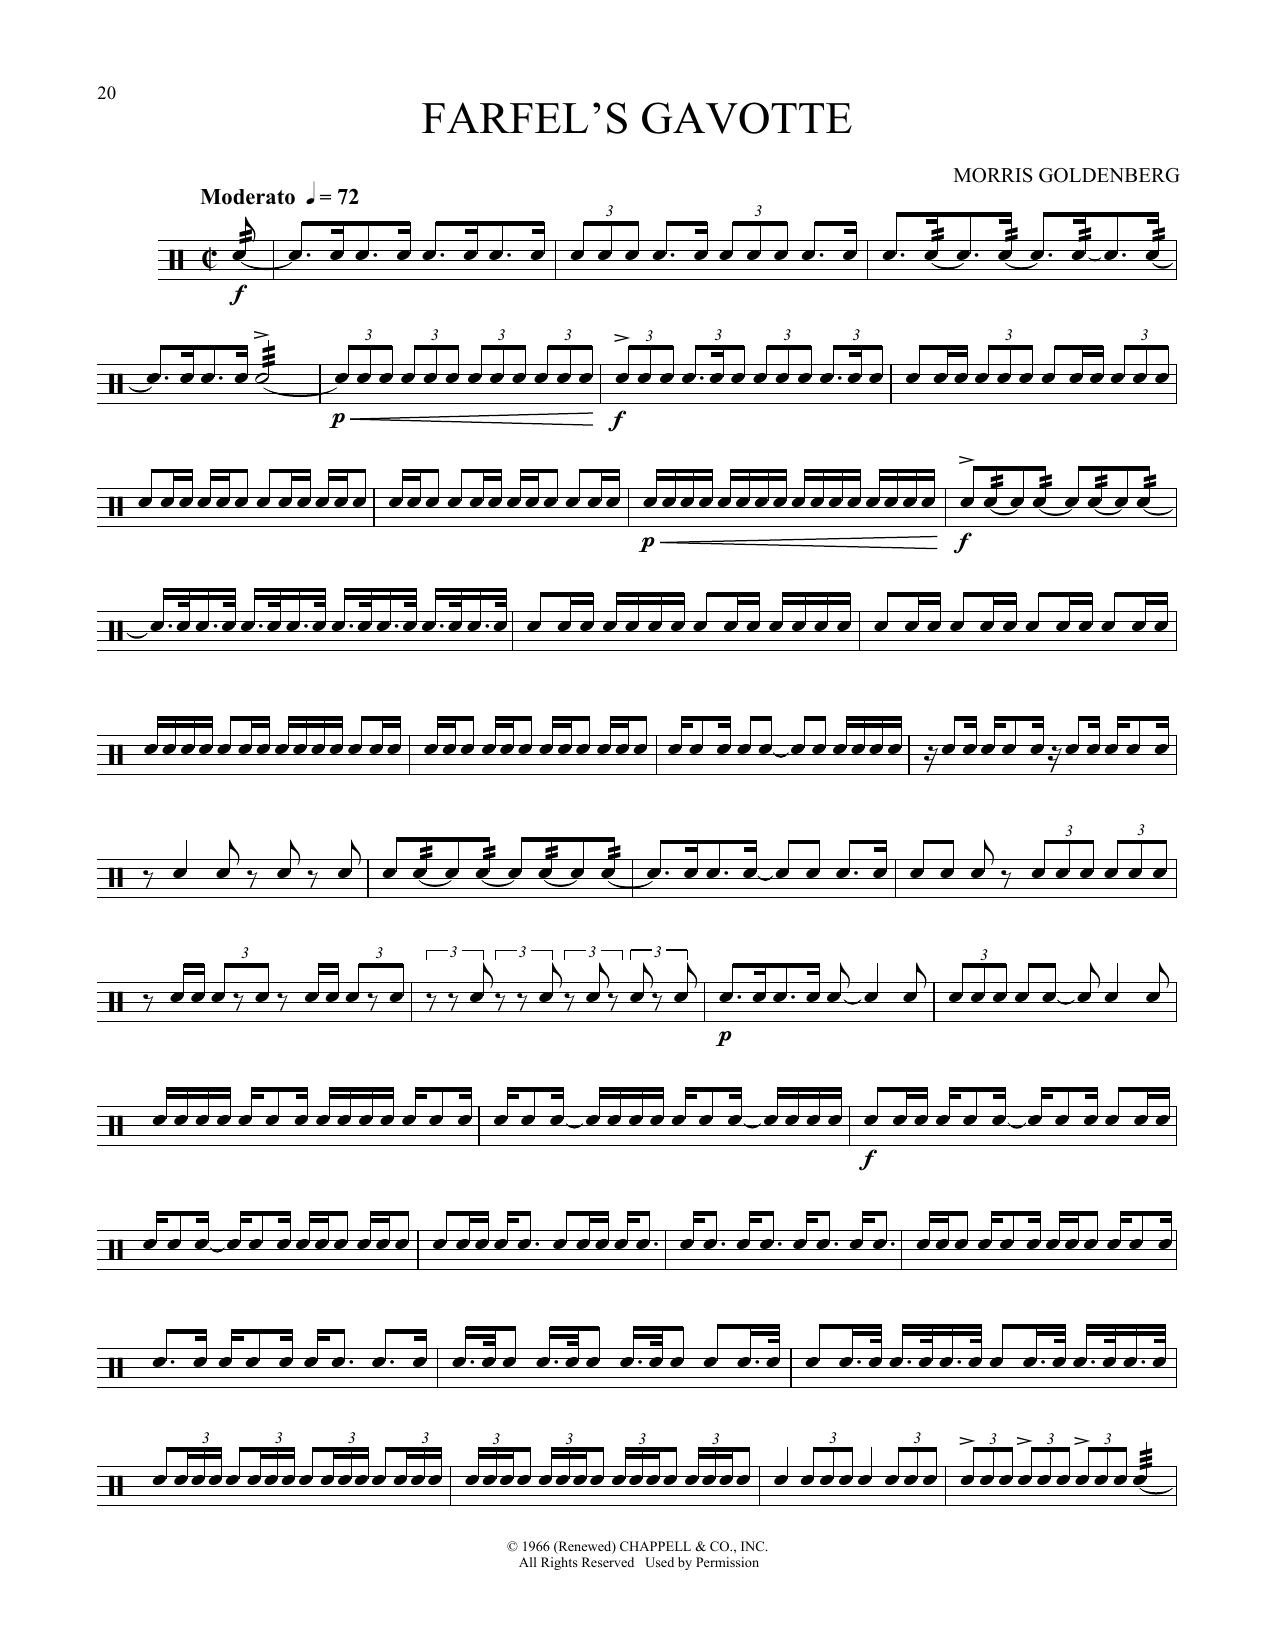 Morris Goldenberg Farfel's Gavotte Sheet Music Notes & Chords for Snare Drum Solo - Download or Print PDF